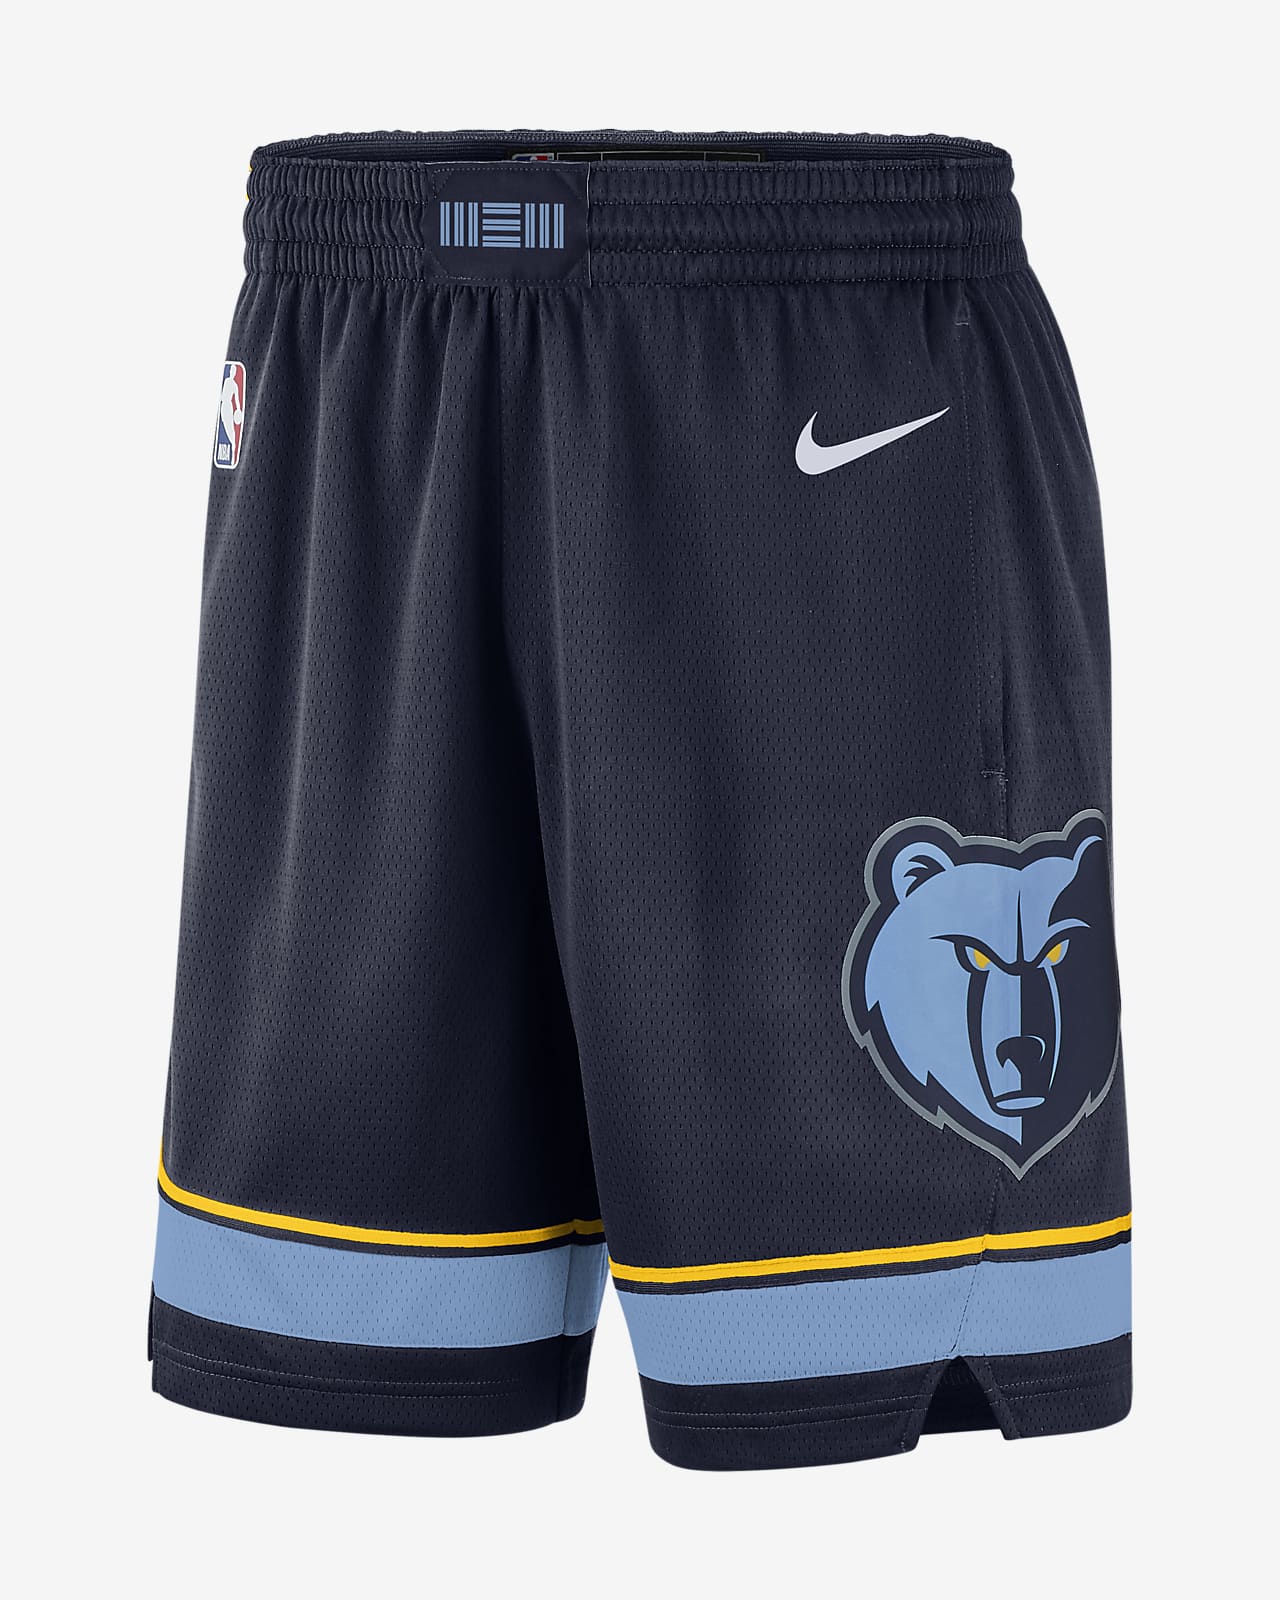 memphis grizzlies jersey shorts